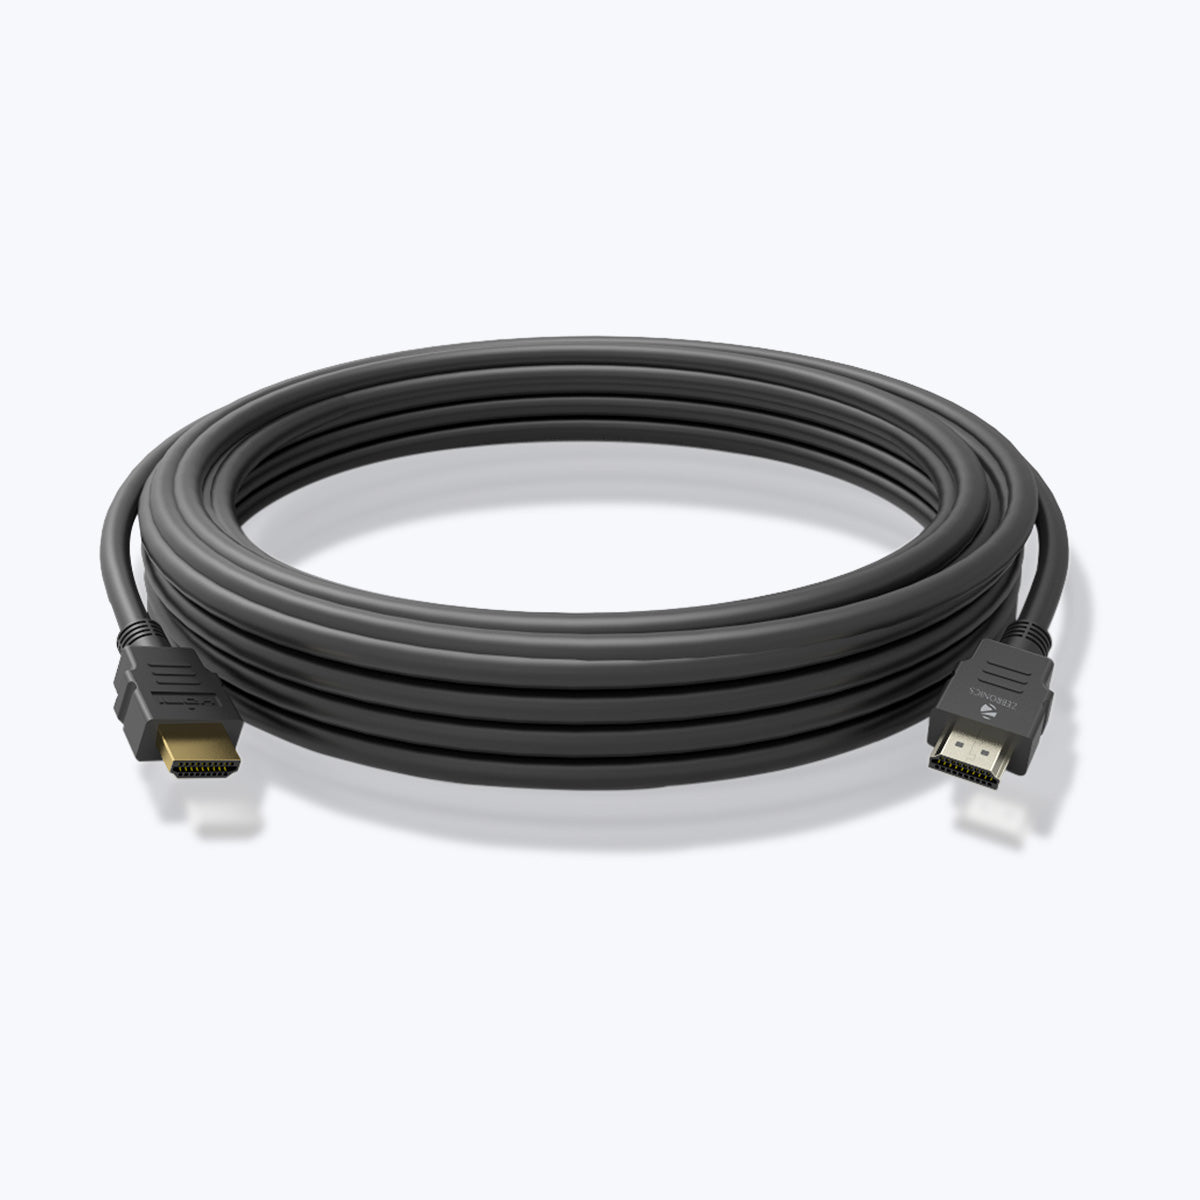 ZEB-HAA3020 (3 Meter) - HDMI Cable - Zebronics